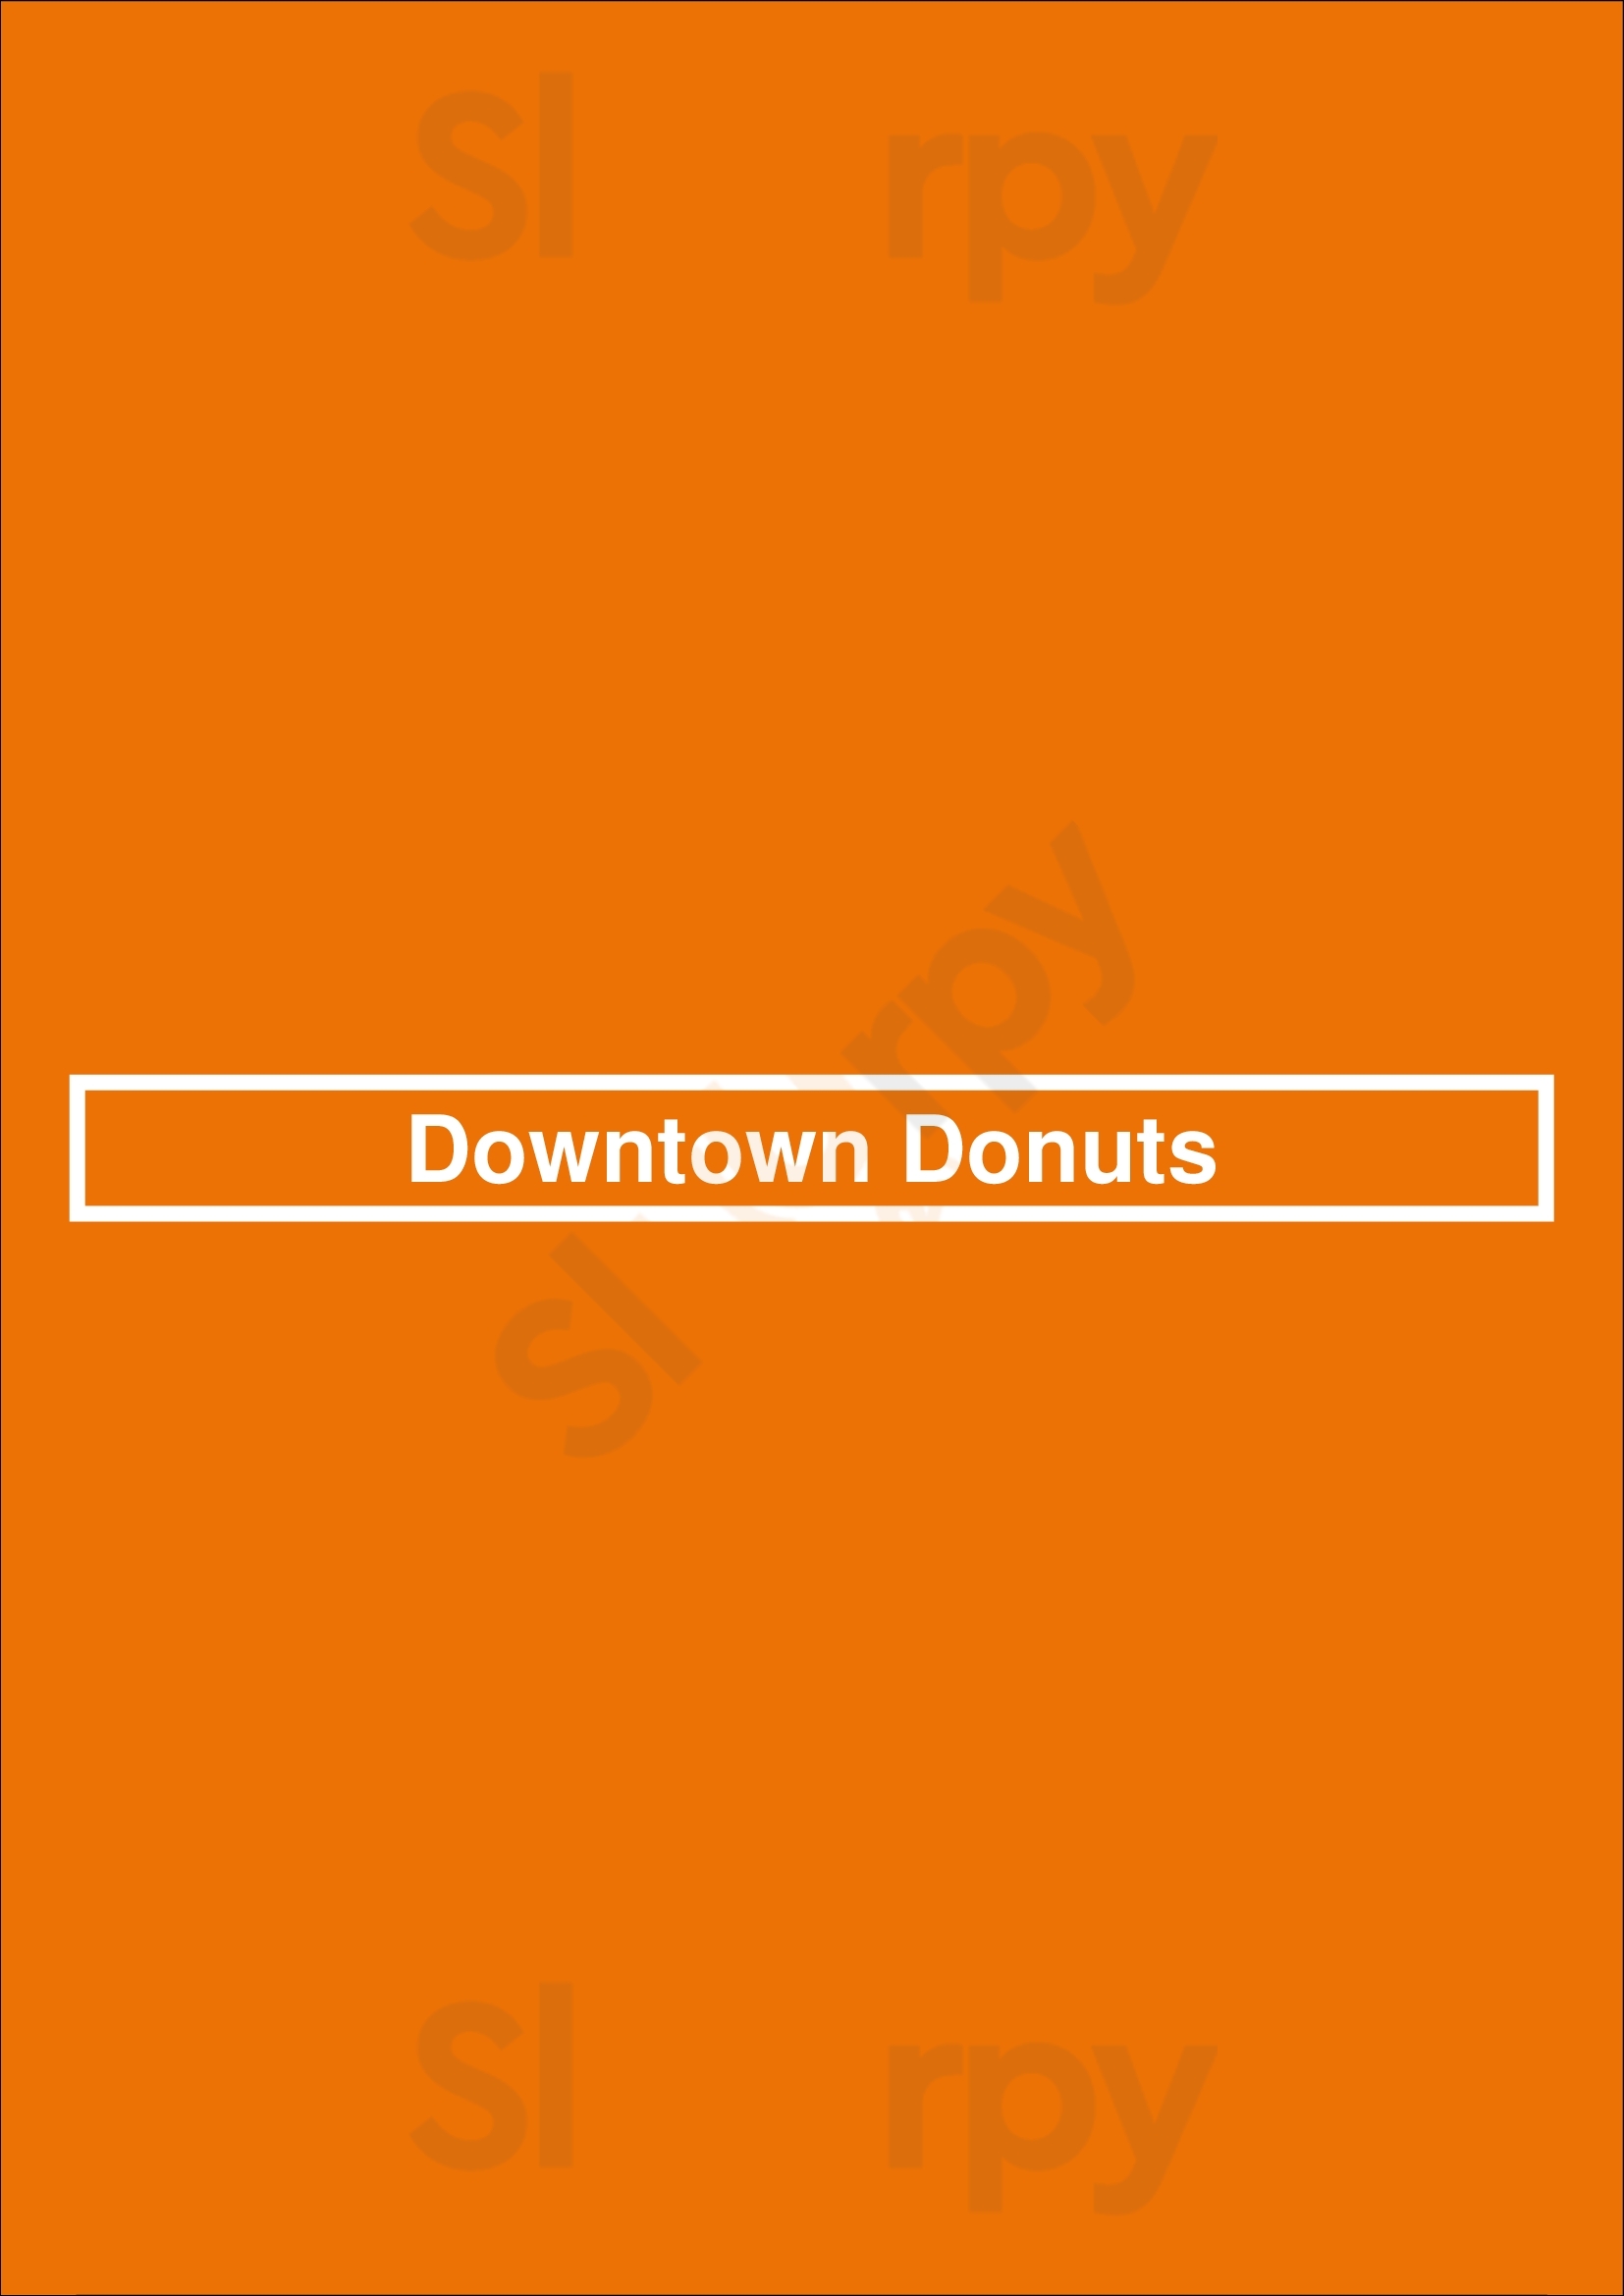 Downtown Donuts Los Angeles Menu - 1